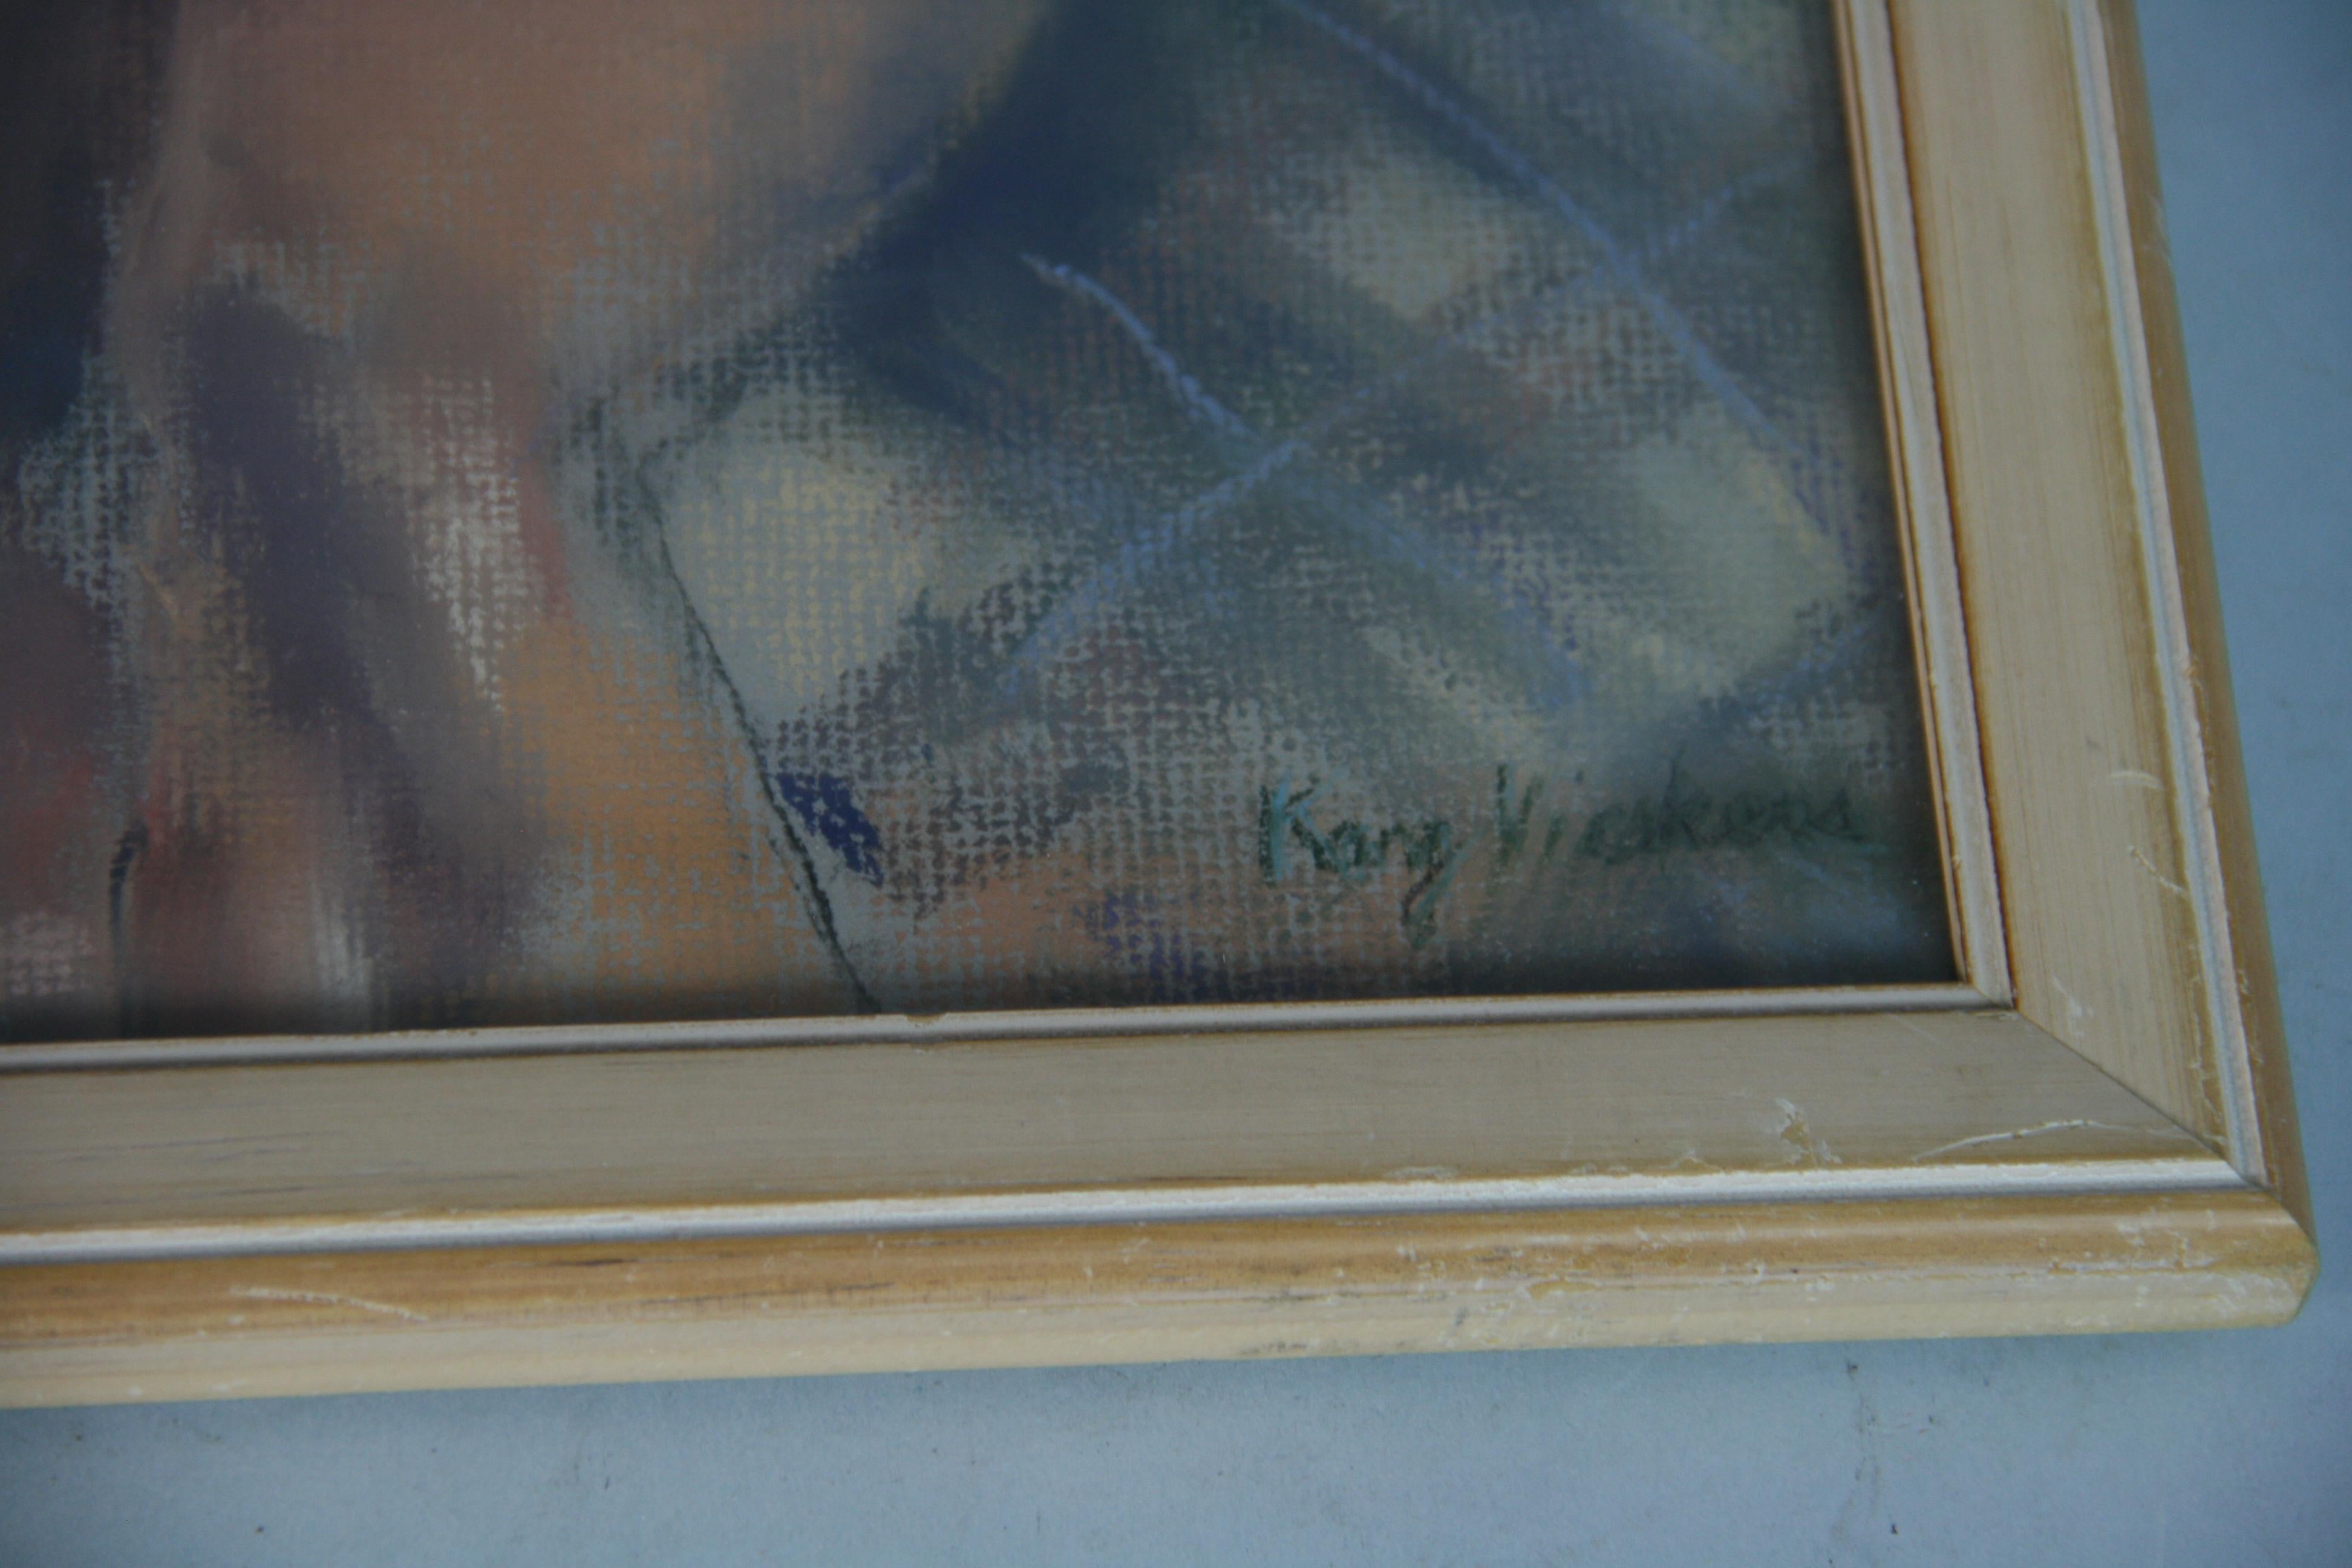 5004 Vintage Impressionist female nuse oil pastel on artist paper under glass
Signed Kery Vickers